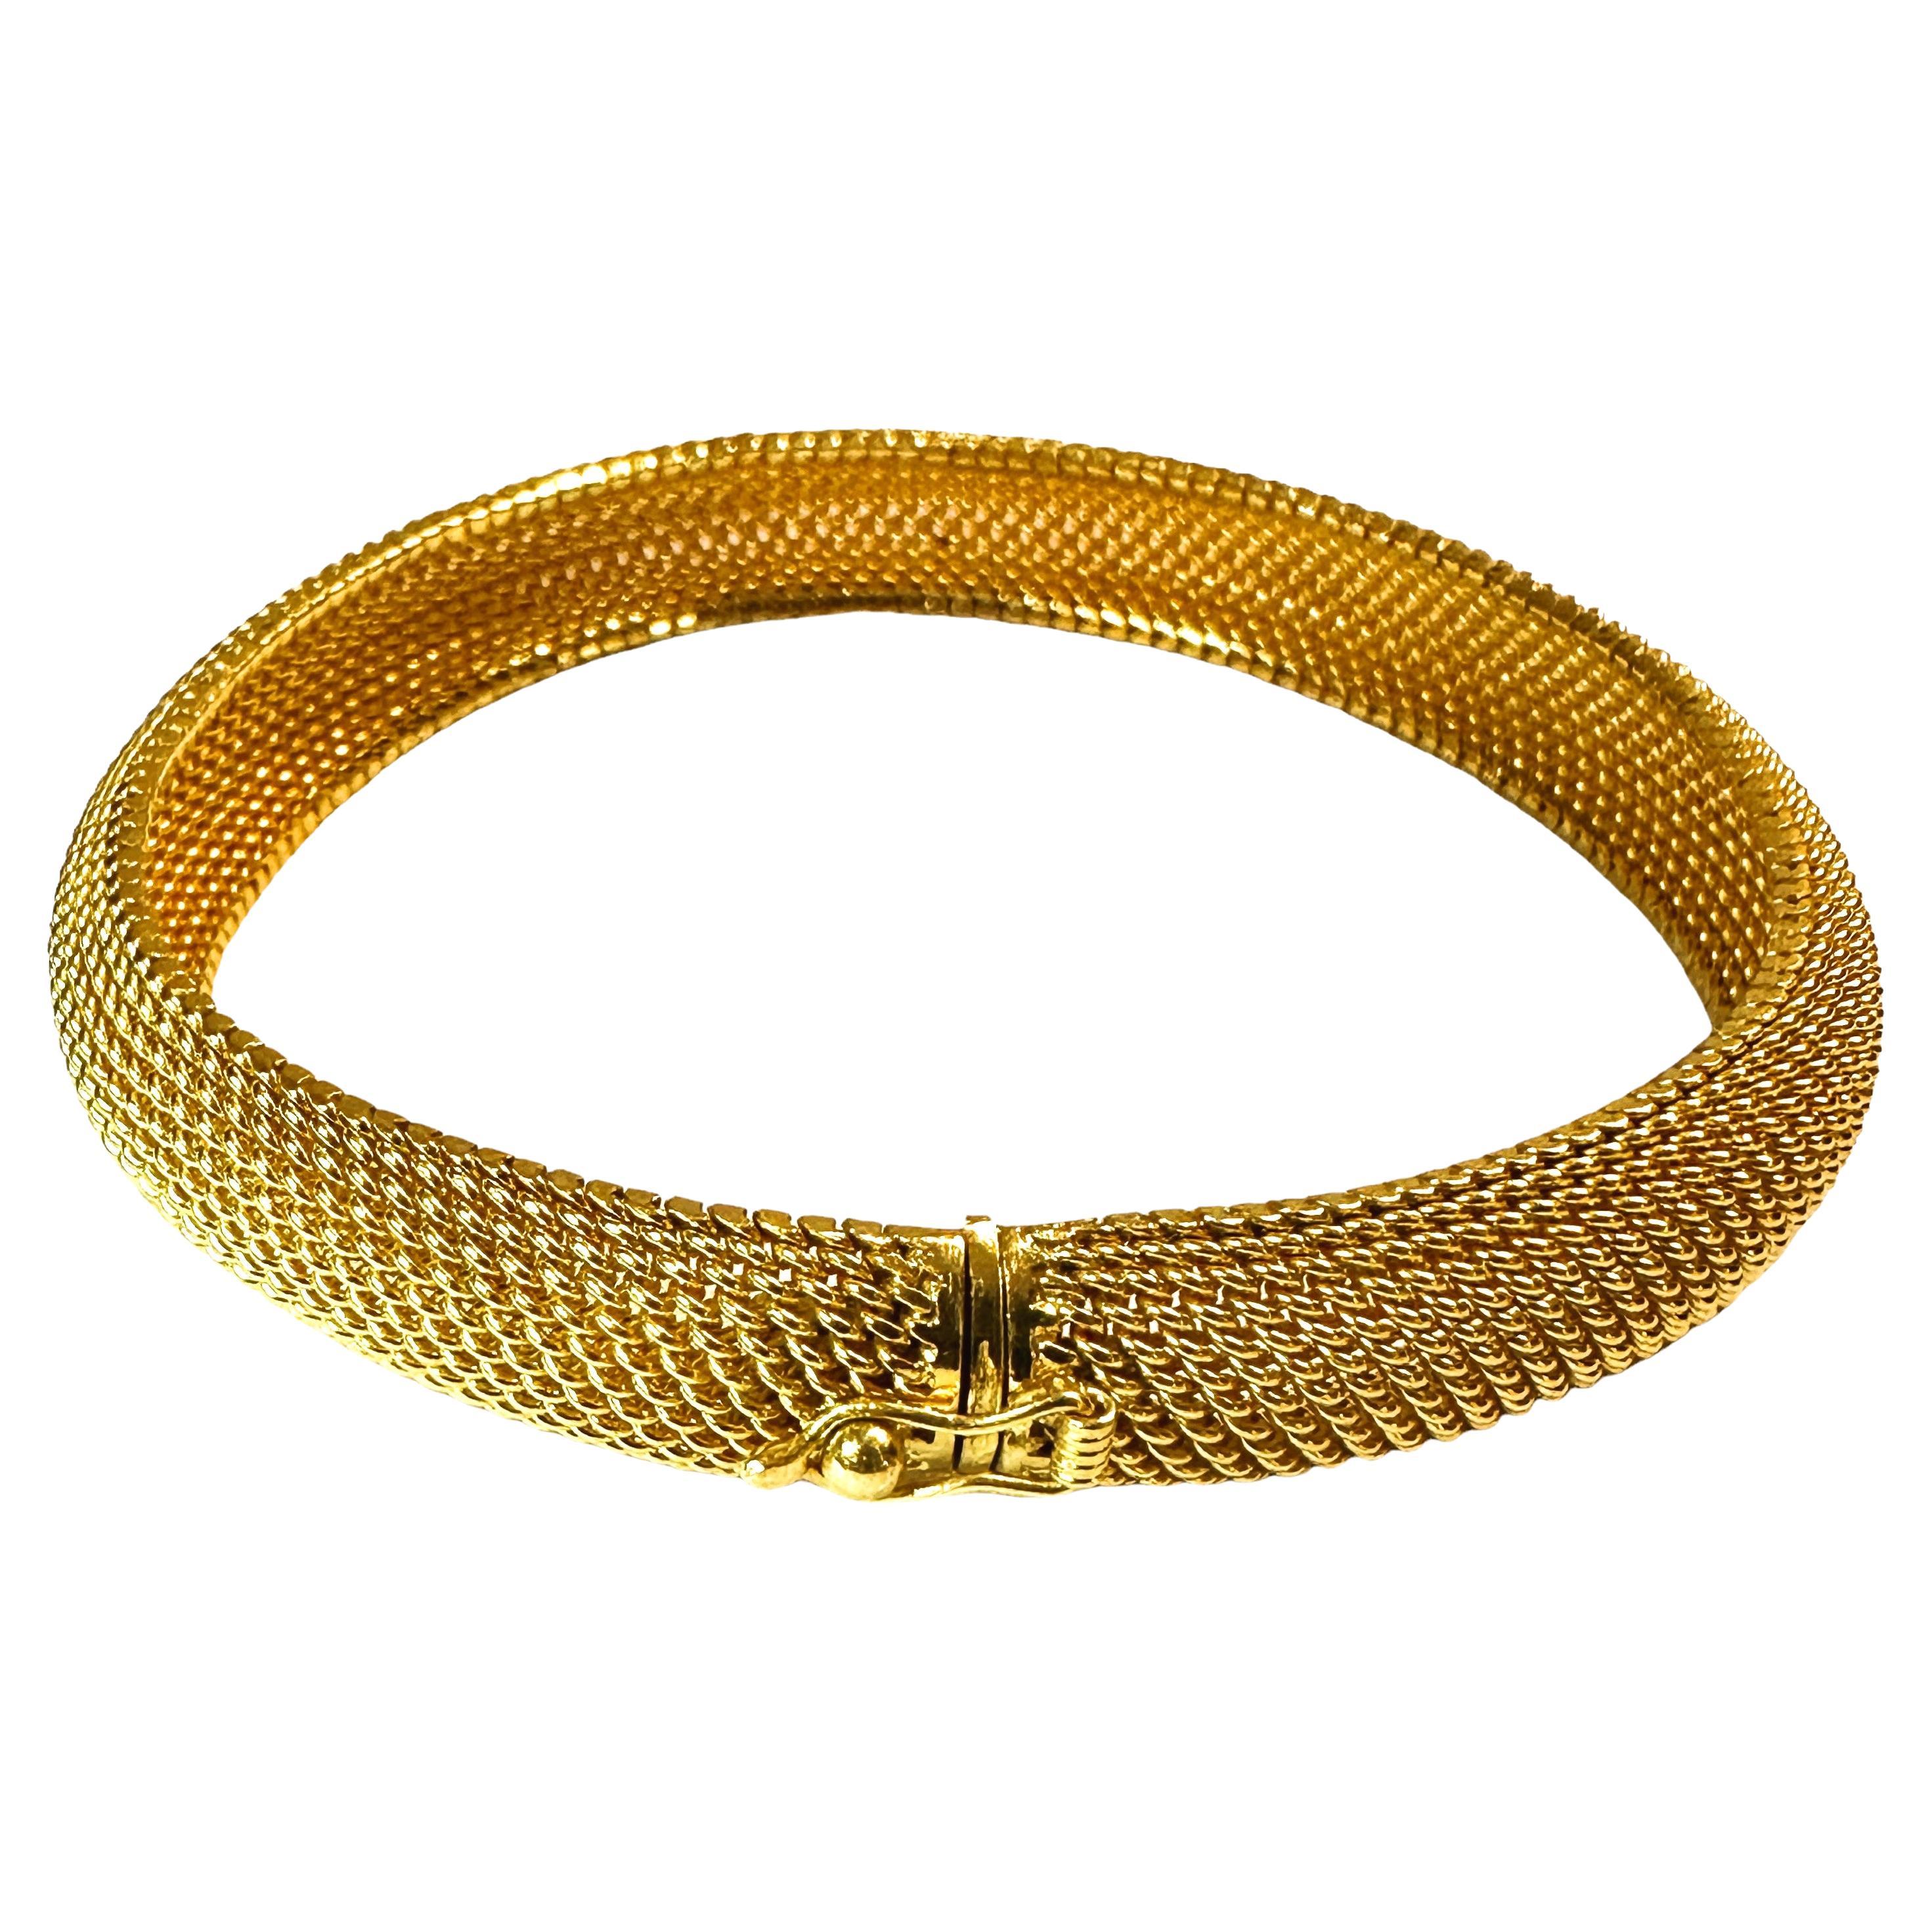 Stunning 22K Yellow Gold Woven Caviar Bracelet 30.59 Grams